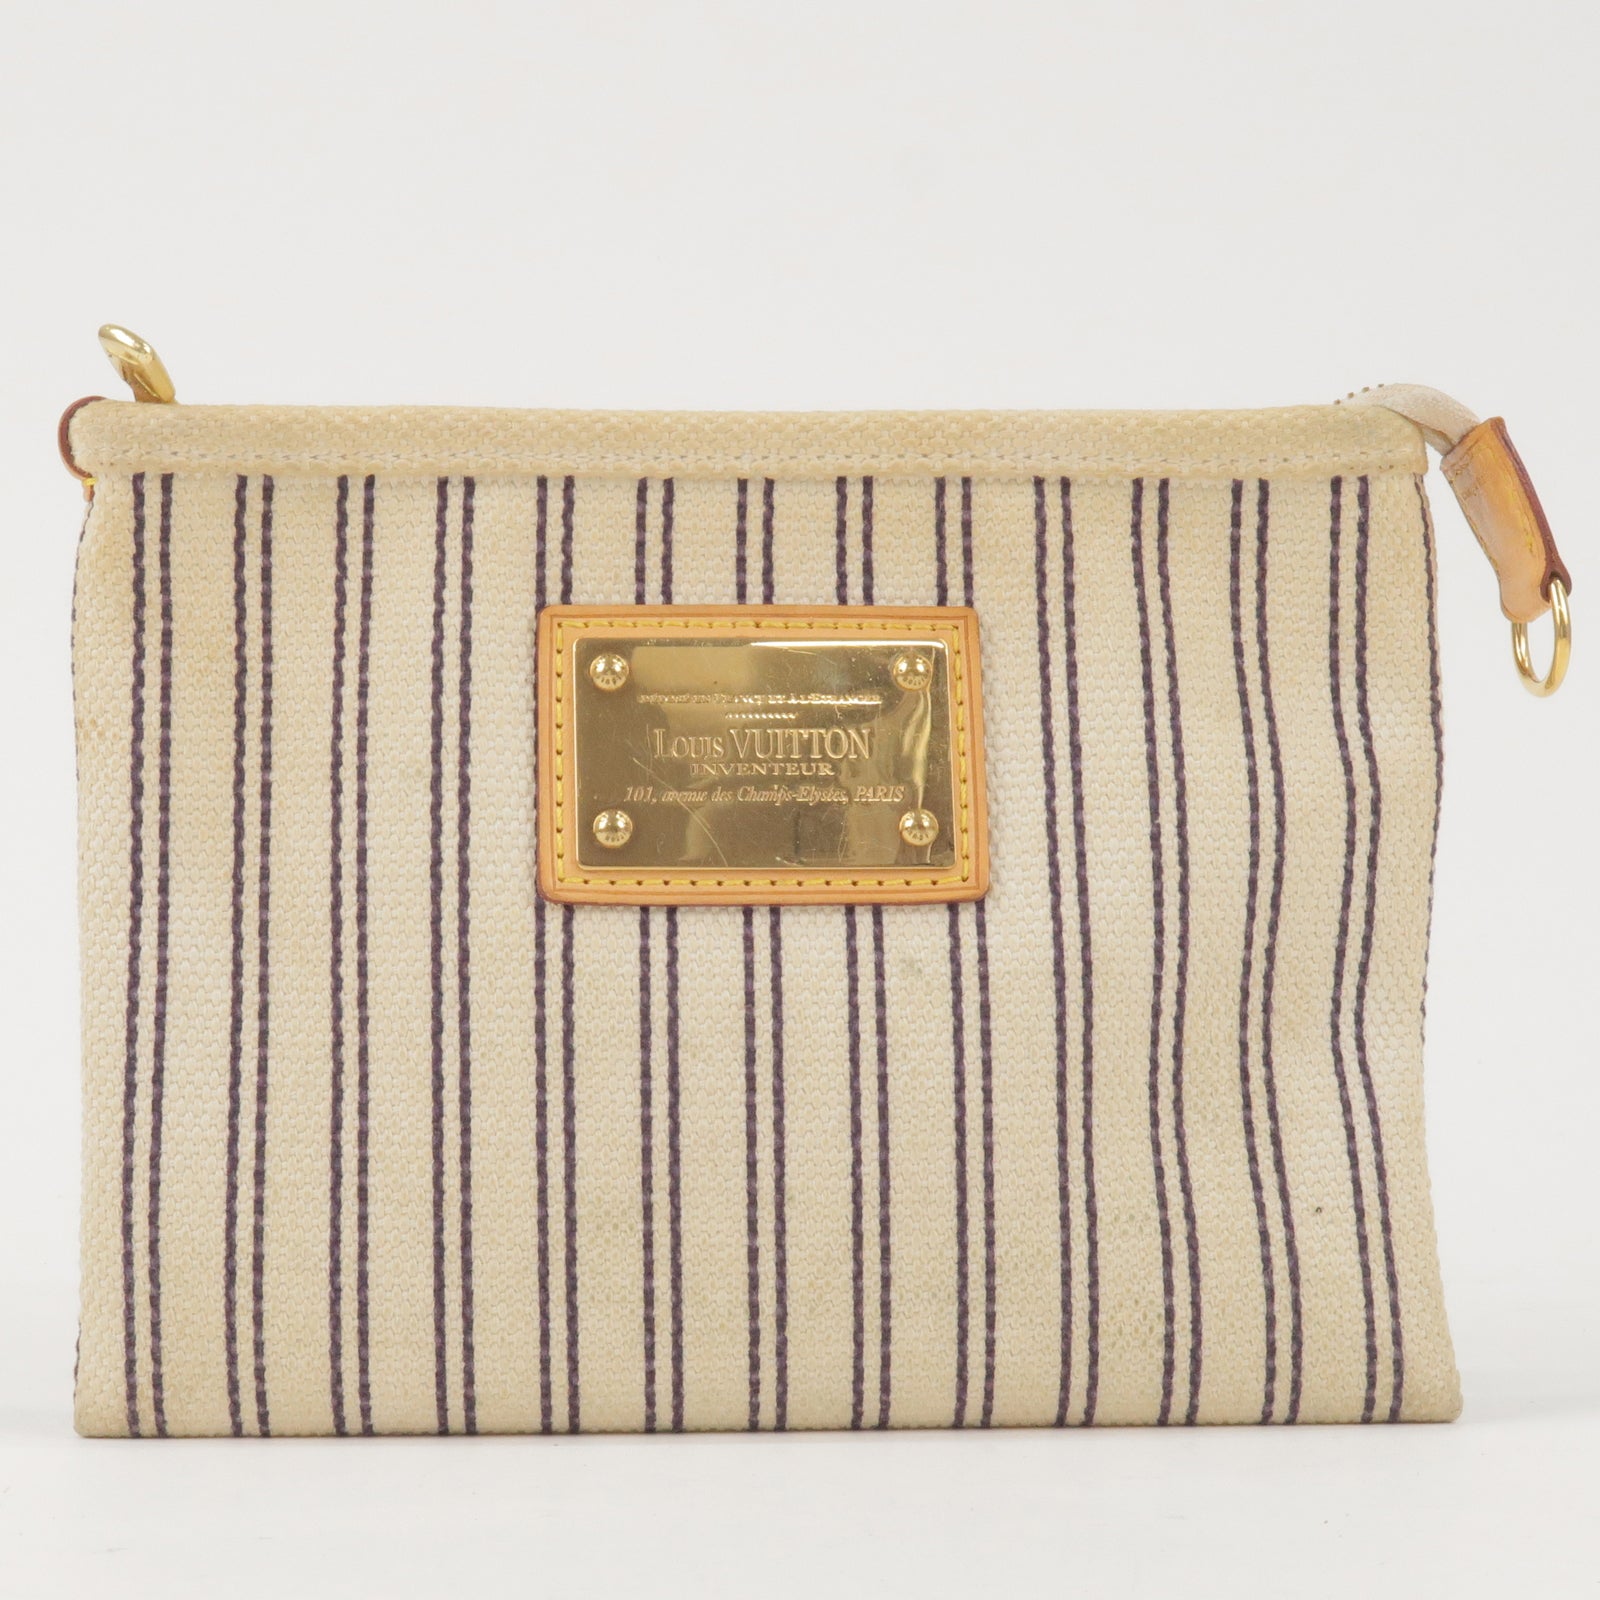 Louis Vuitton Brown Pochette Antigua Plate Pm 868394 Cosmetic Bag